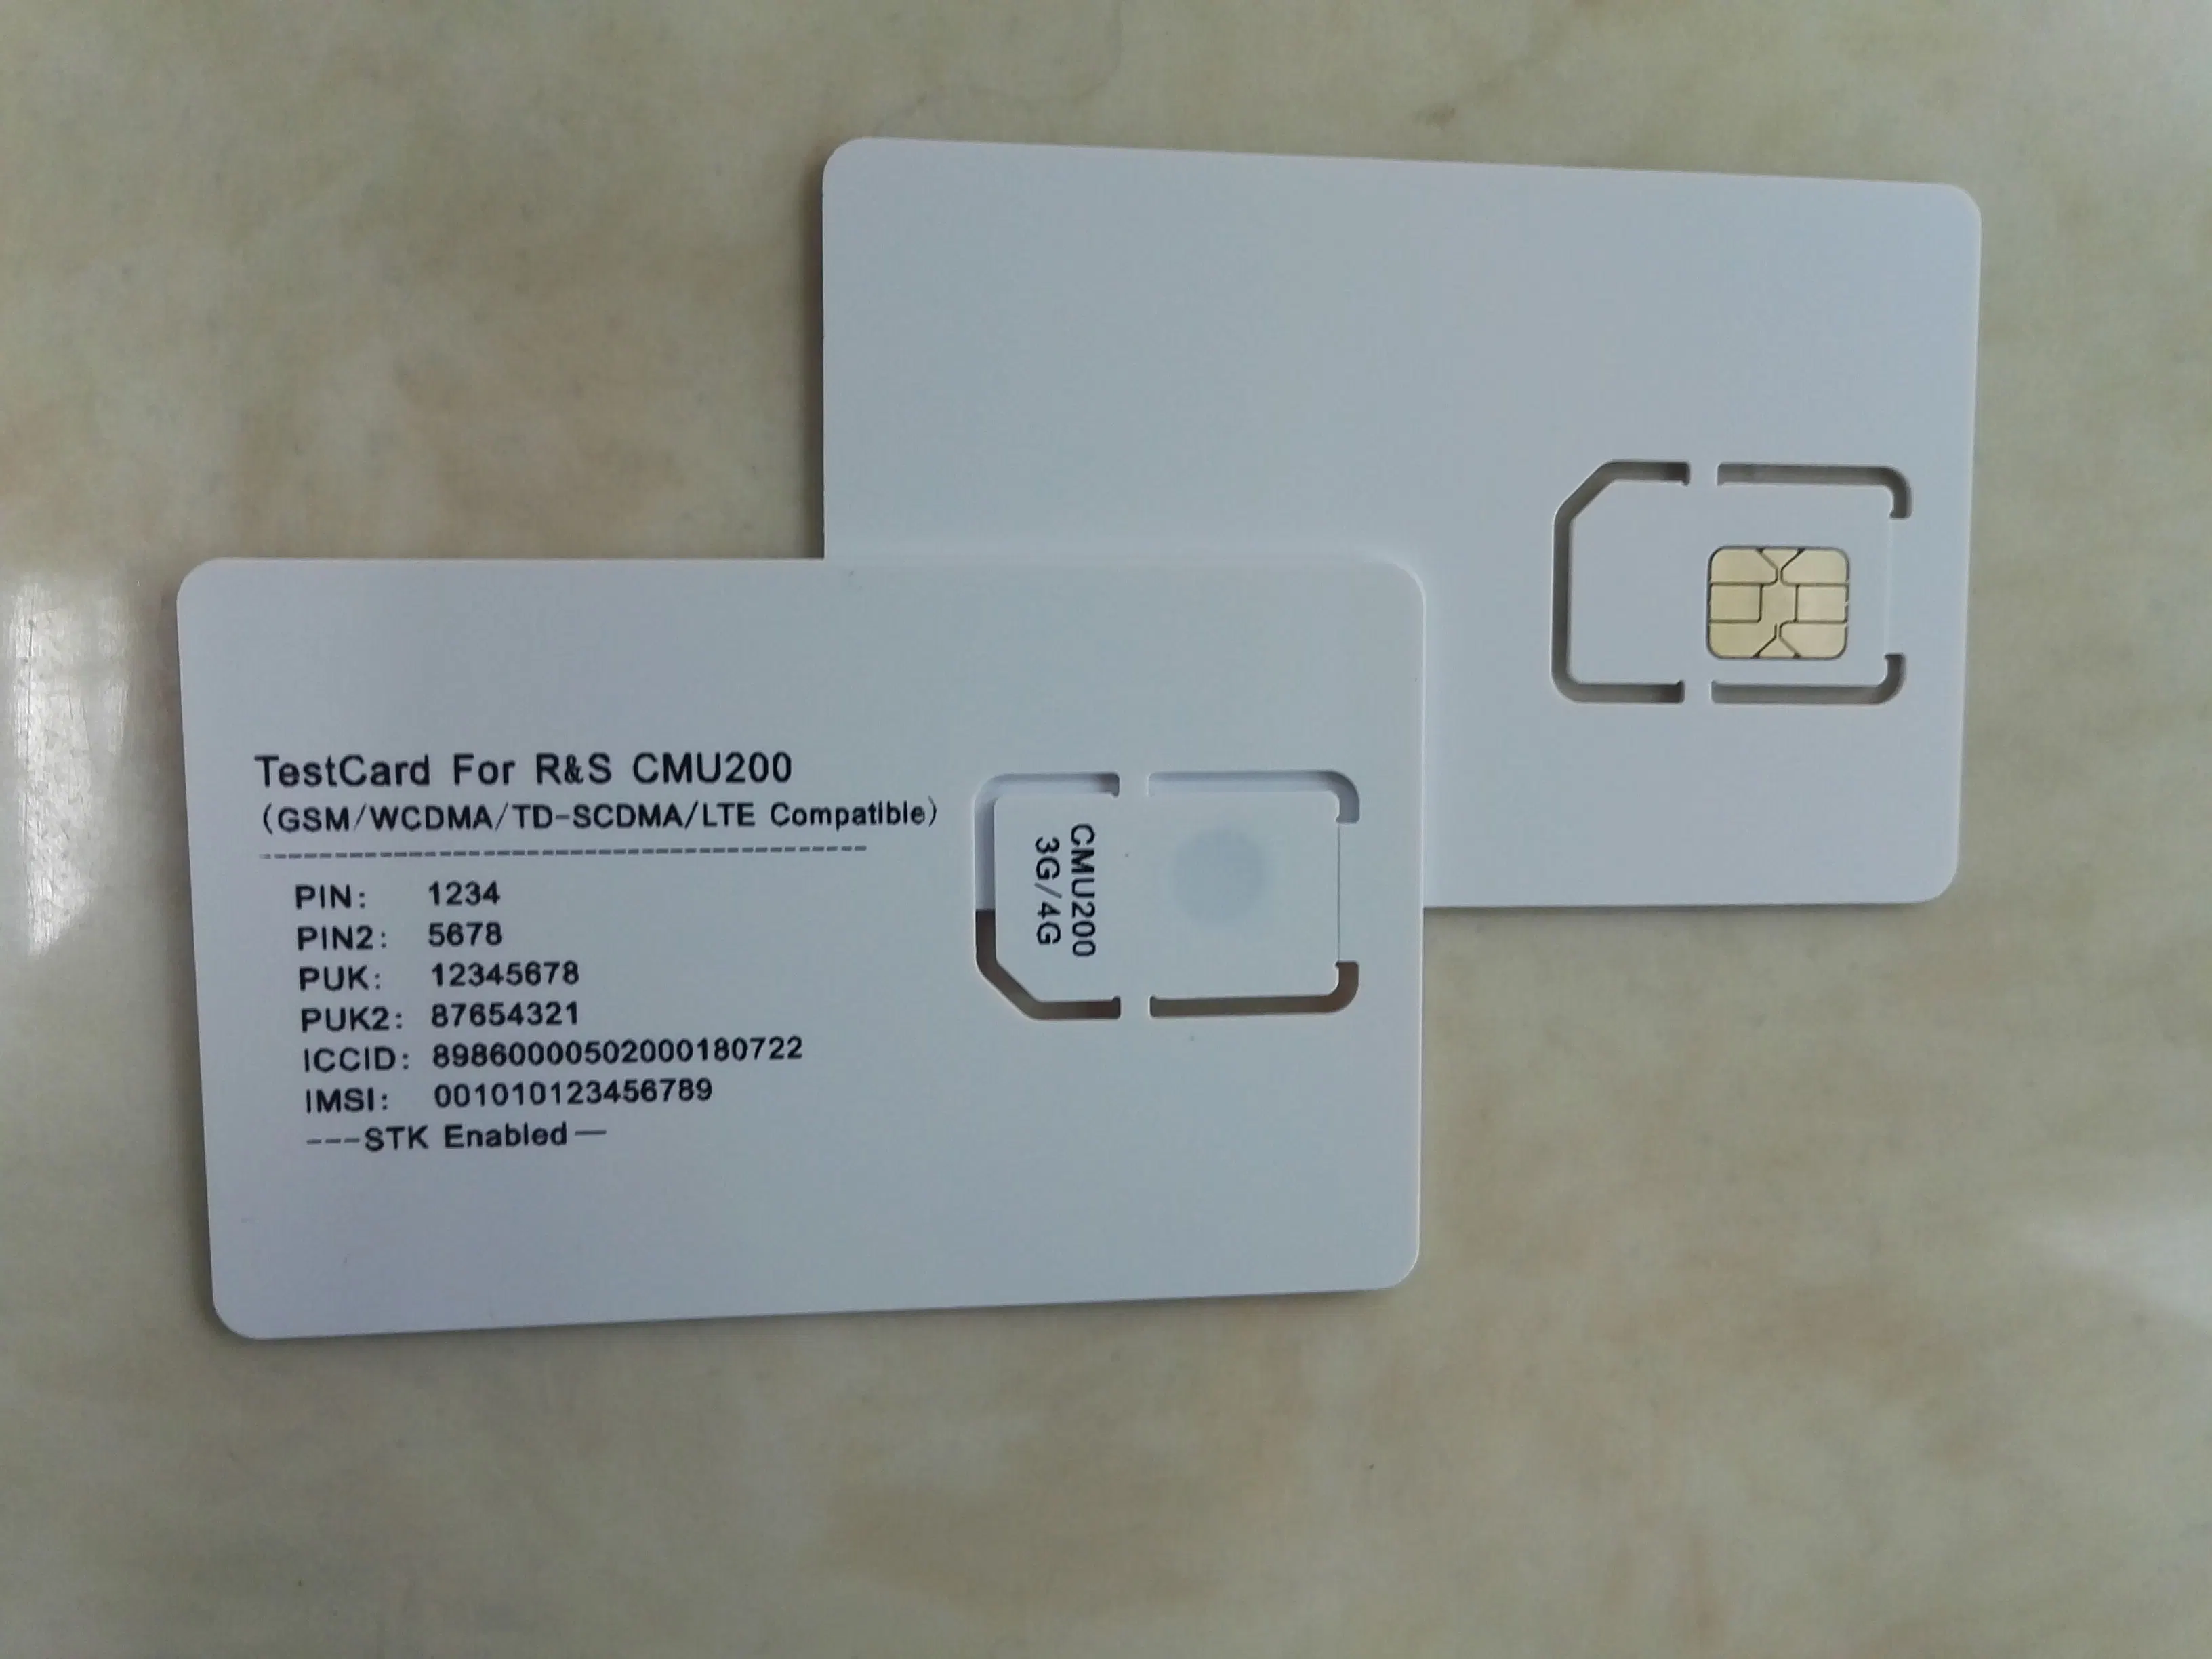 3G/4G Cmu200 Mini SIM Test Card